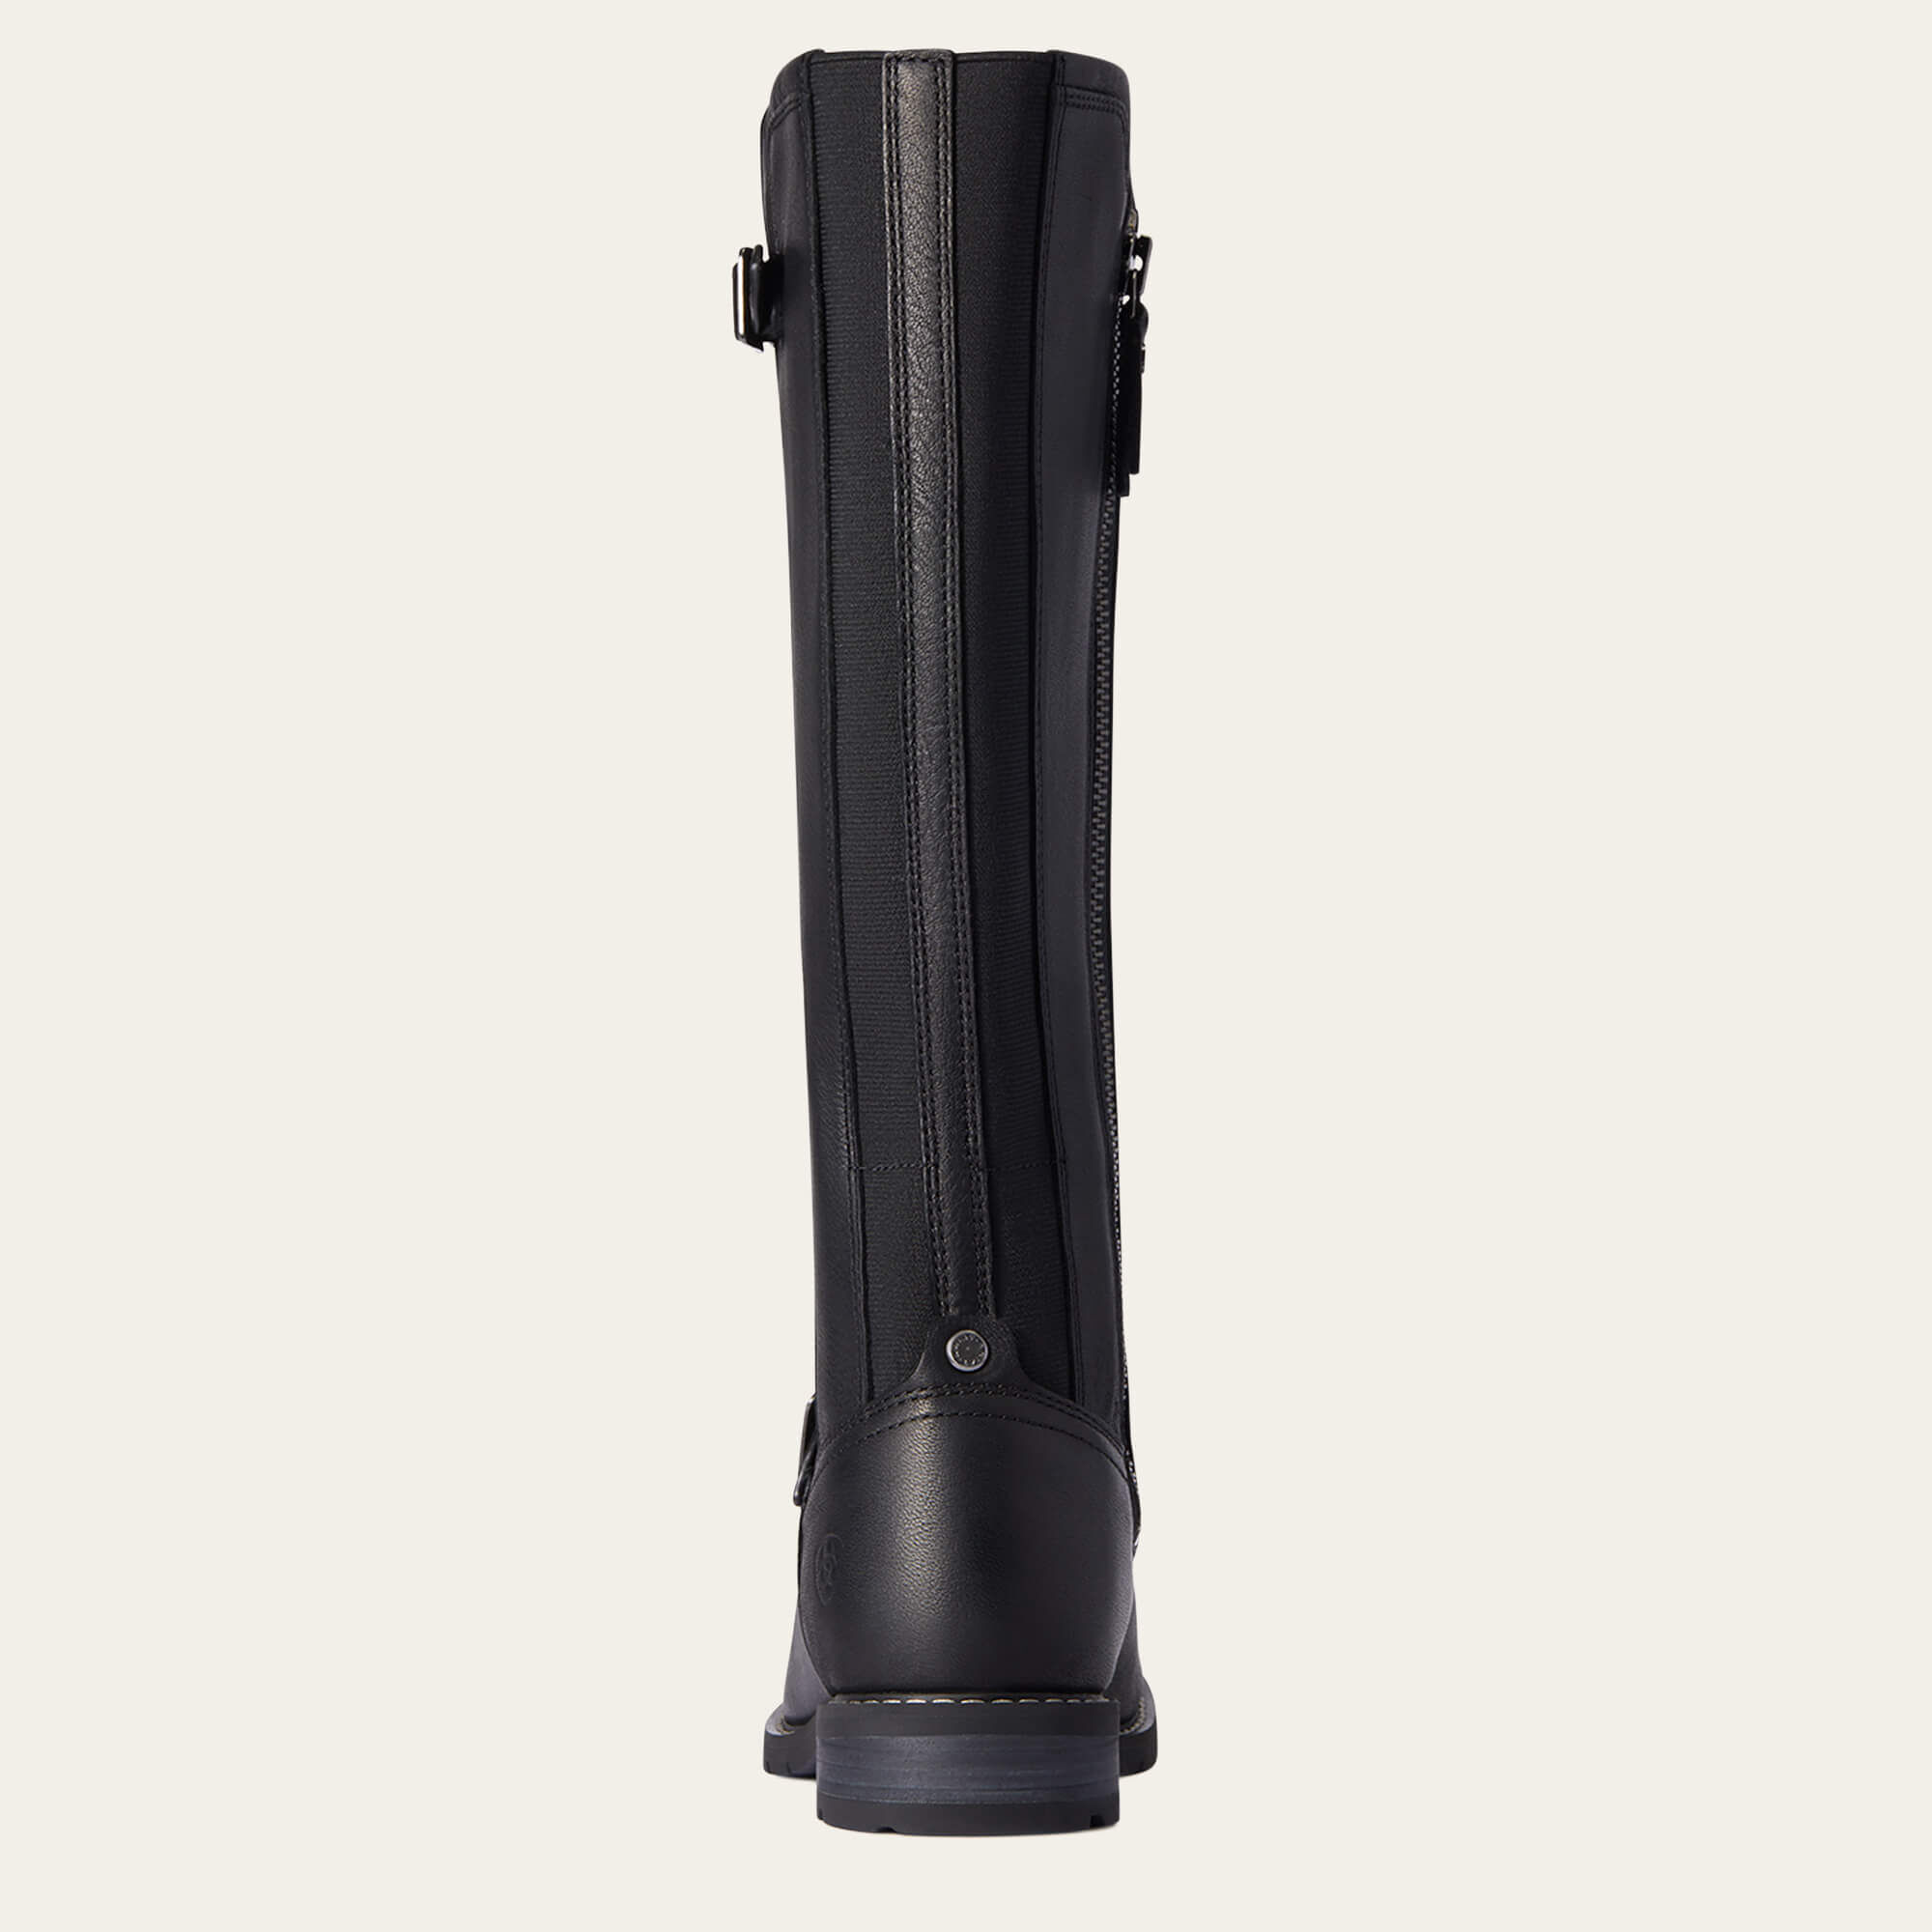 Women's Sadie Waterproof Boots in Black Leather, Size: 7 B / Medium by Ariat